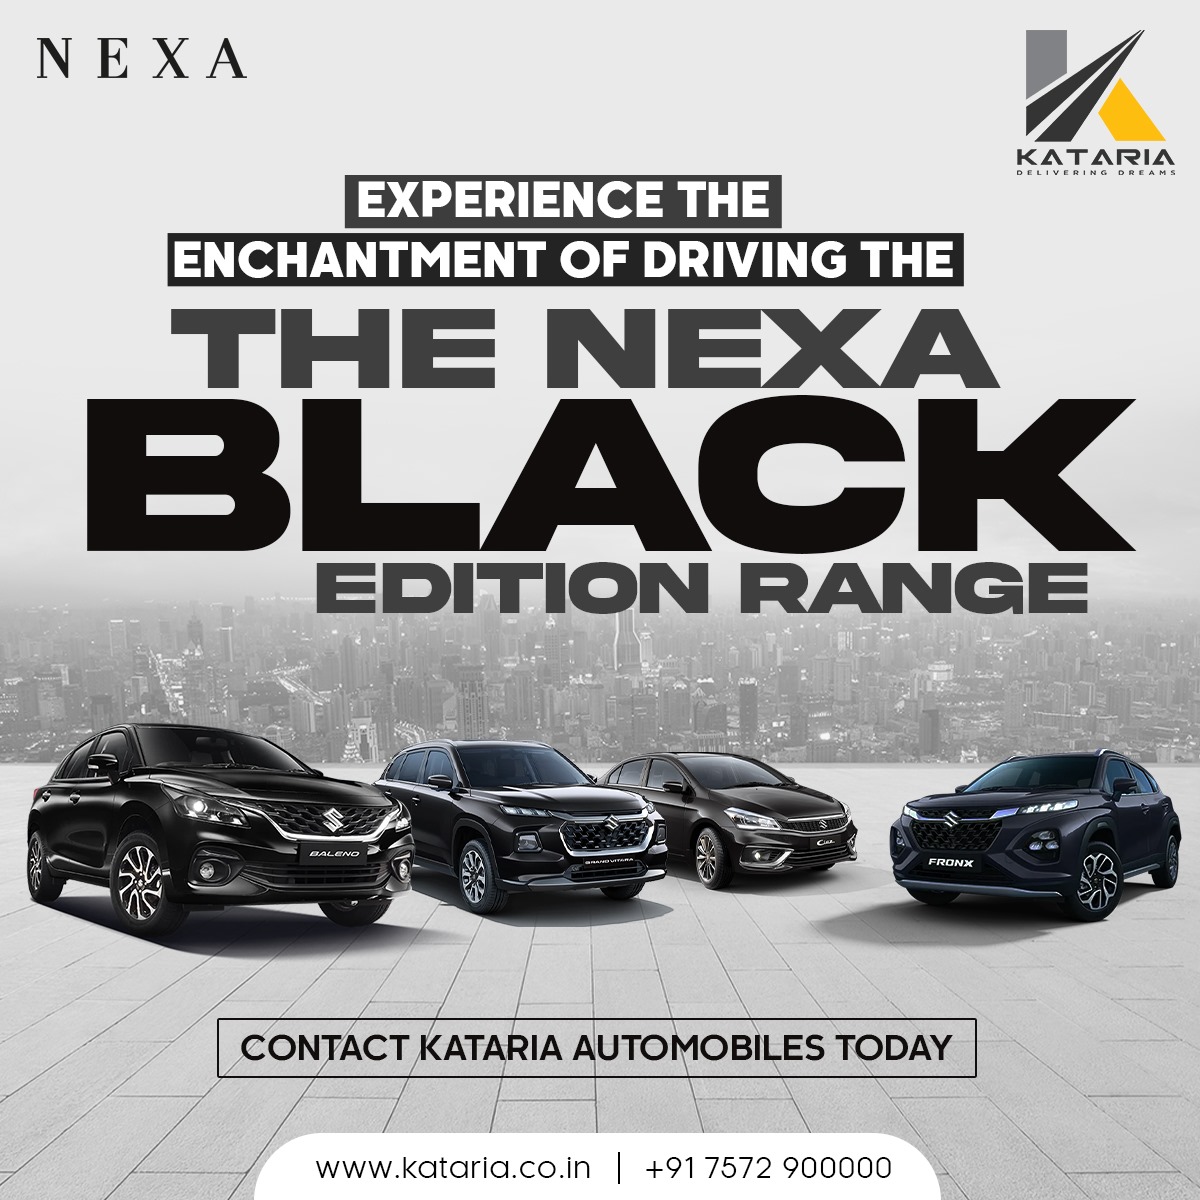 Discover the NEXA Black Edition range today.

Mail us at leads@kataria.co.in or call us at +91 7572900000

#kataria #katariaautomobiles #katariagroup #MarutiSuzuki #KatariaCare #BuyYourOwnCar #BuyFromKataria #NEXA #NEXABlackEdition